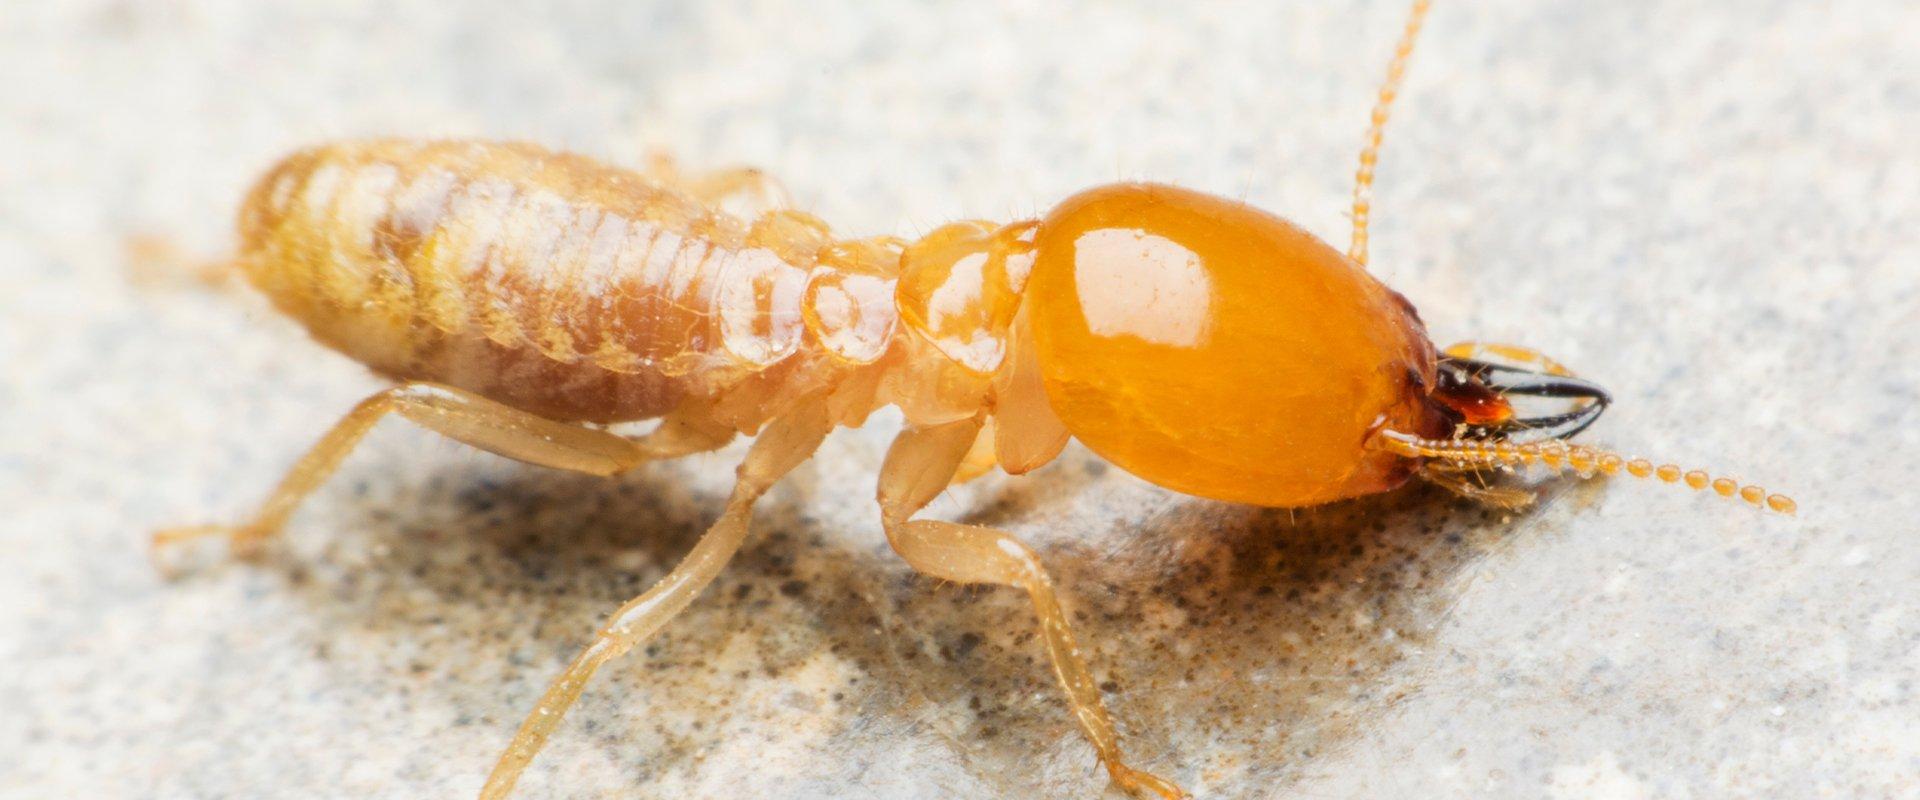 termite on kitchen counter